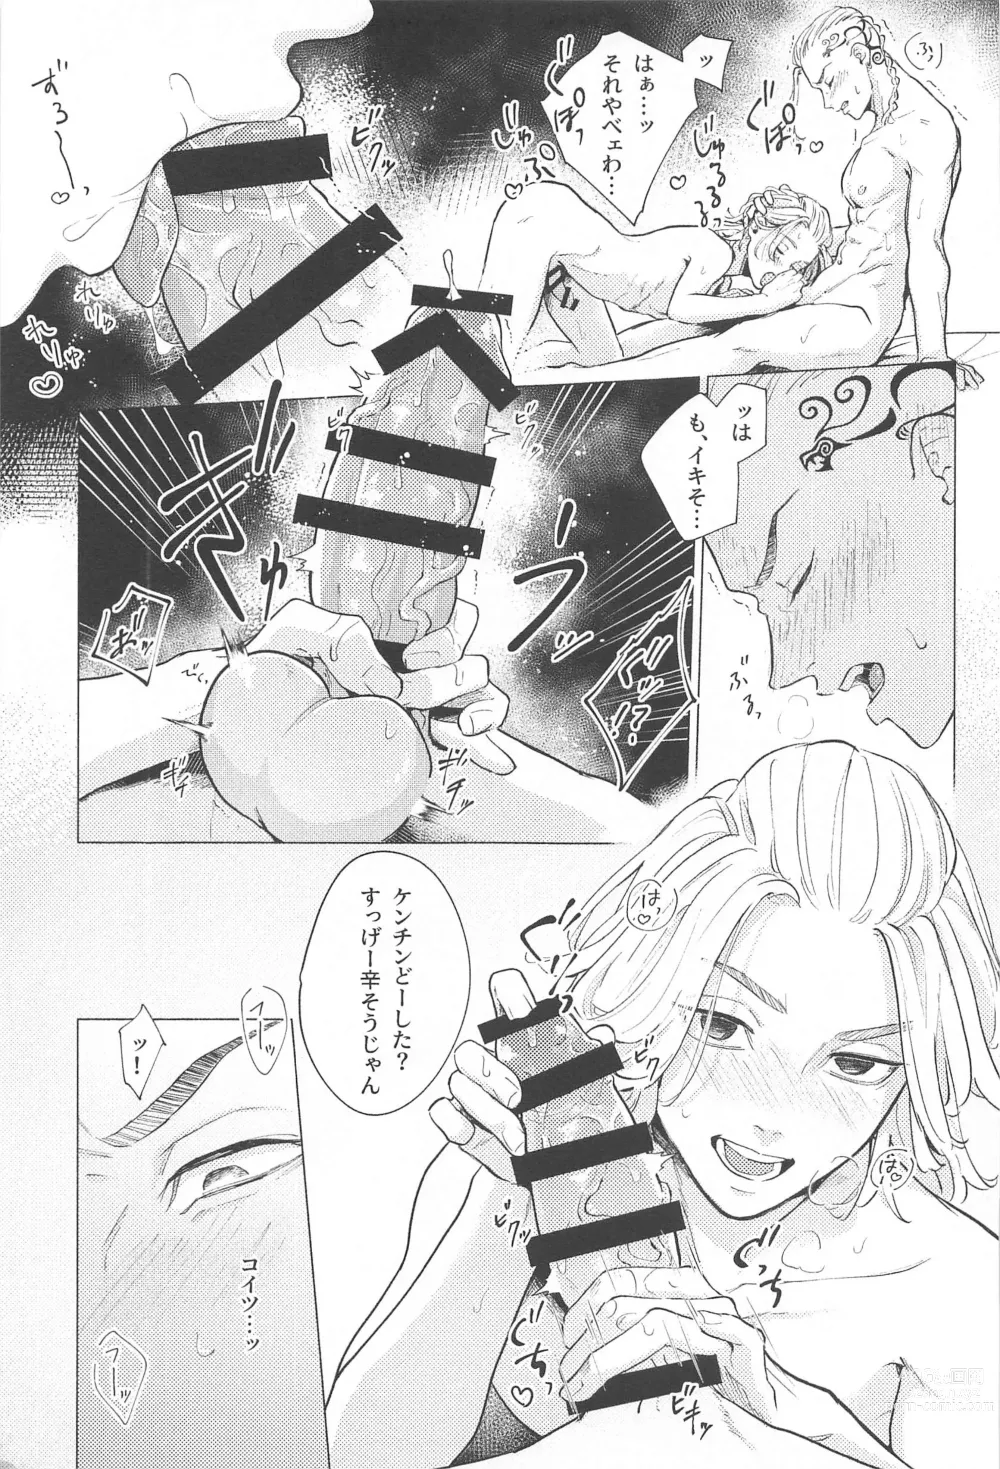 Page 8 of doujinshi Endure.